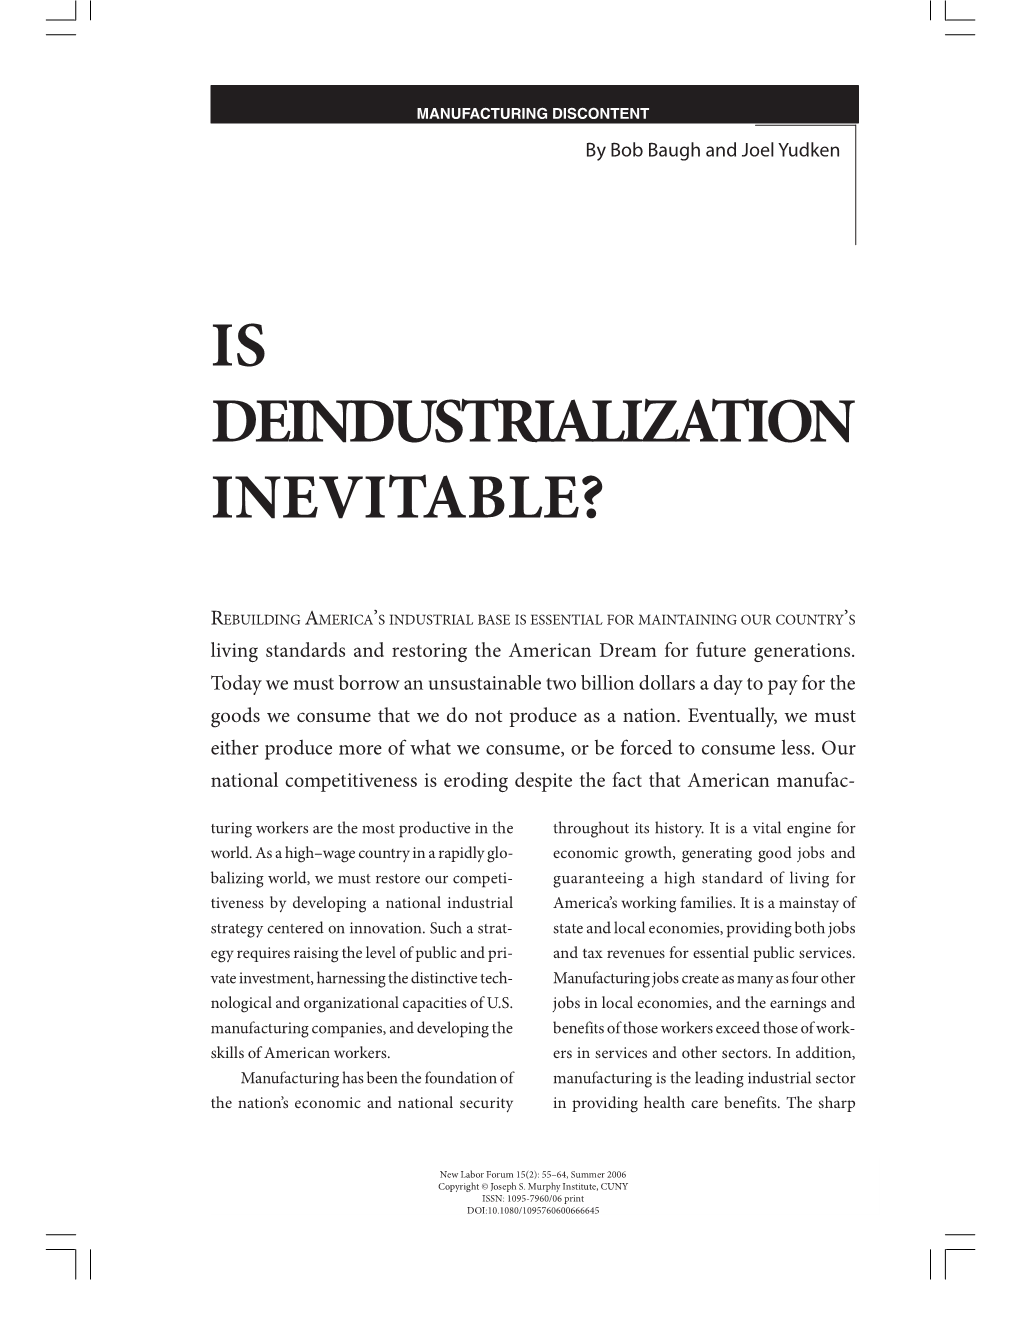 Is Deindustrialization Inevitable?